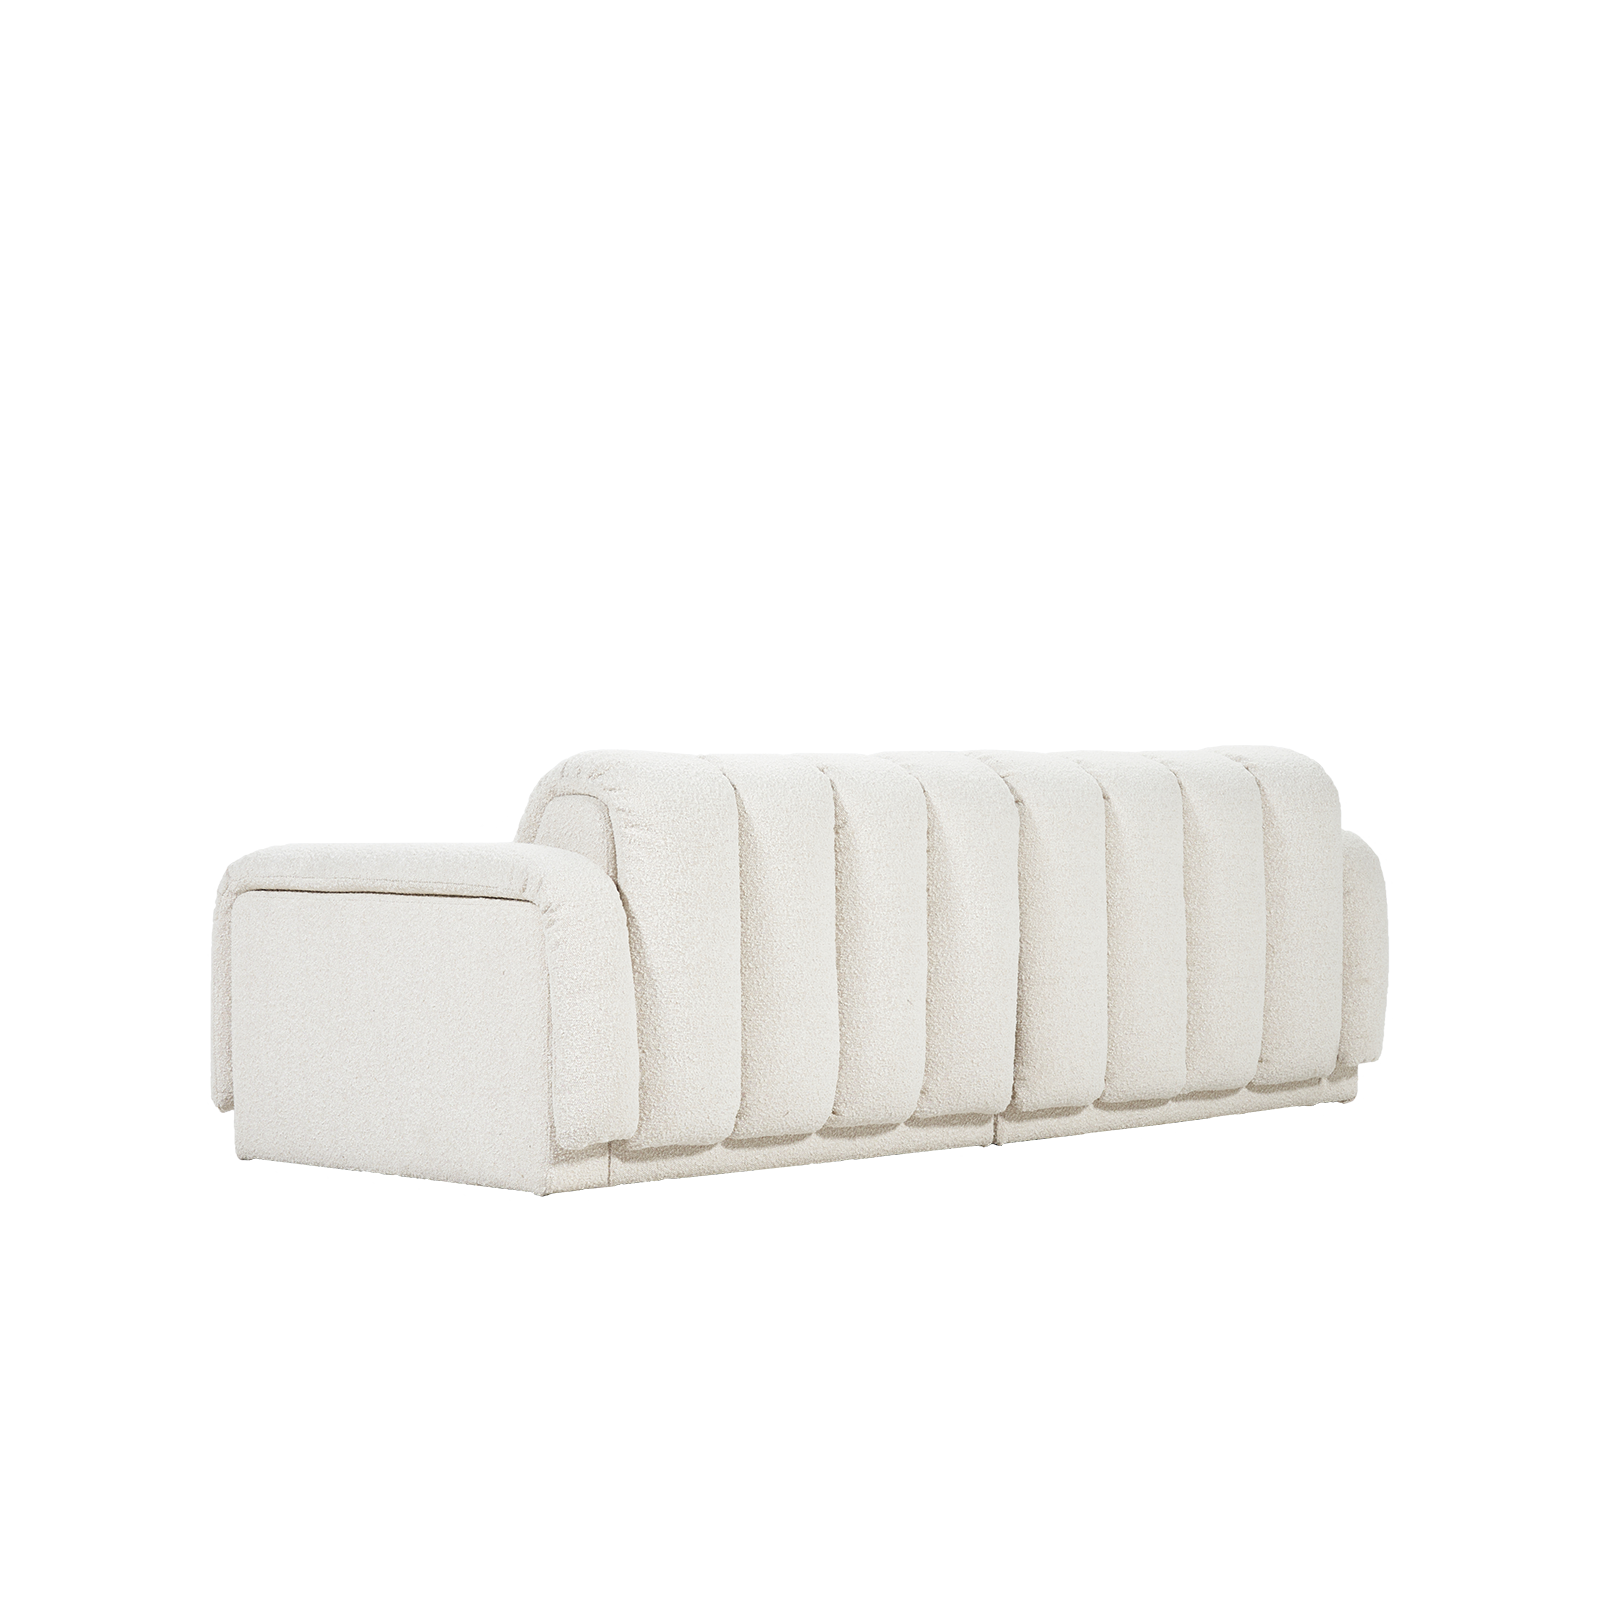 Salami-Sofa / 3-Sitzer